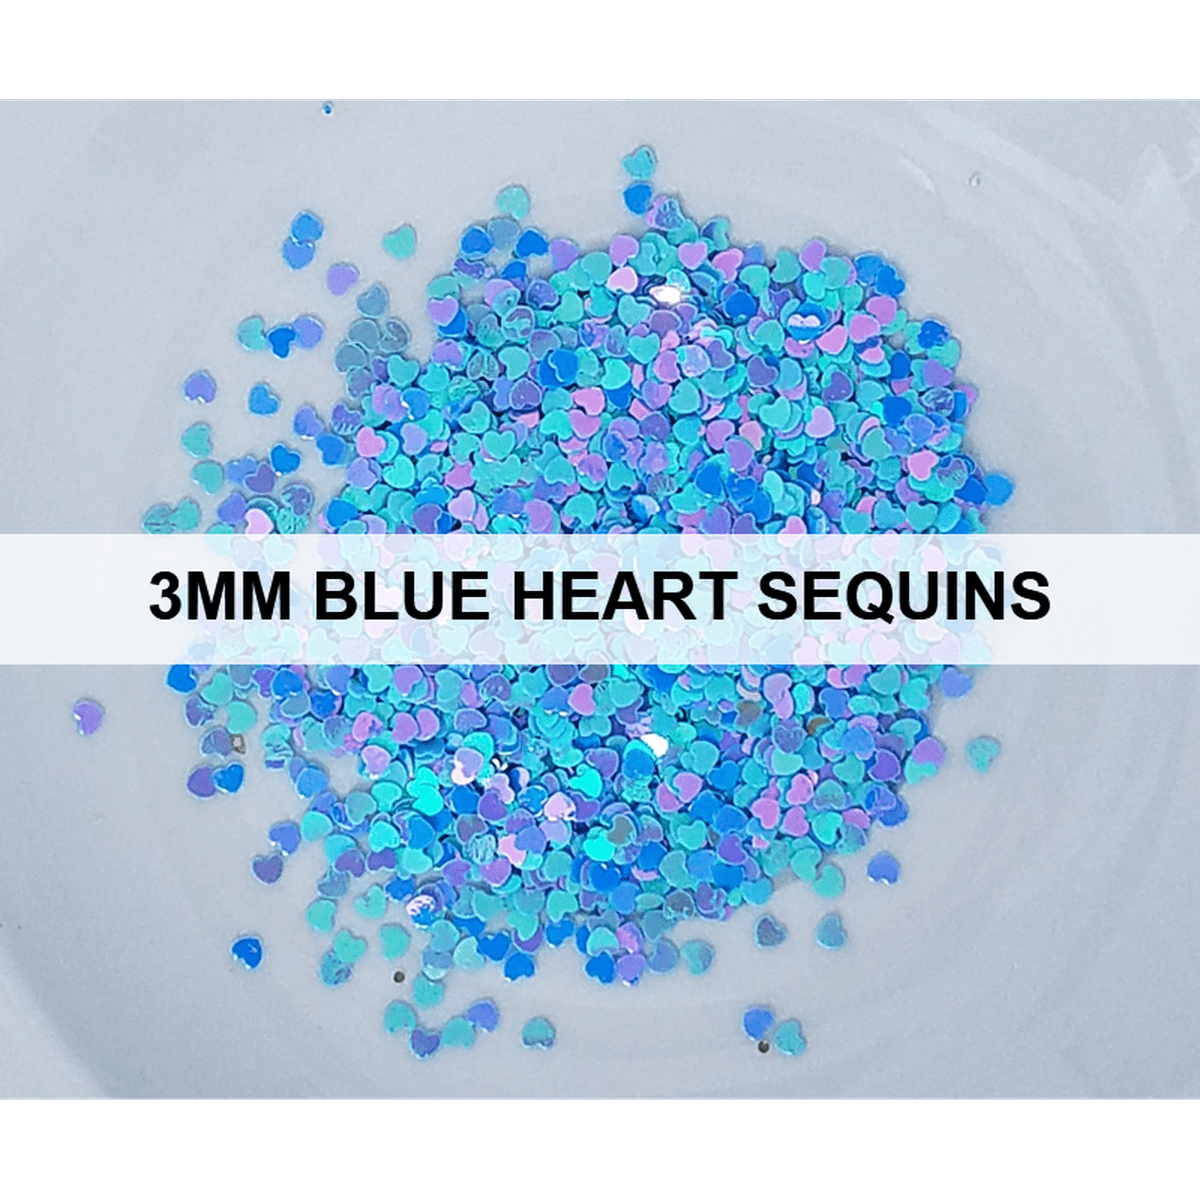 3mm Blue Heart Sequins - Kat Scrappiness